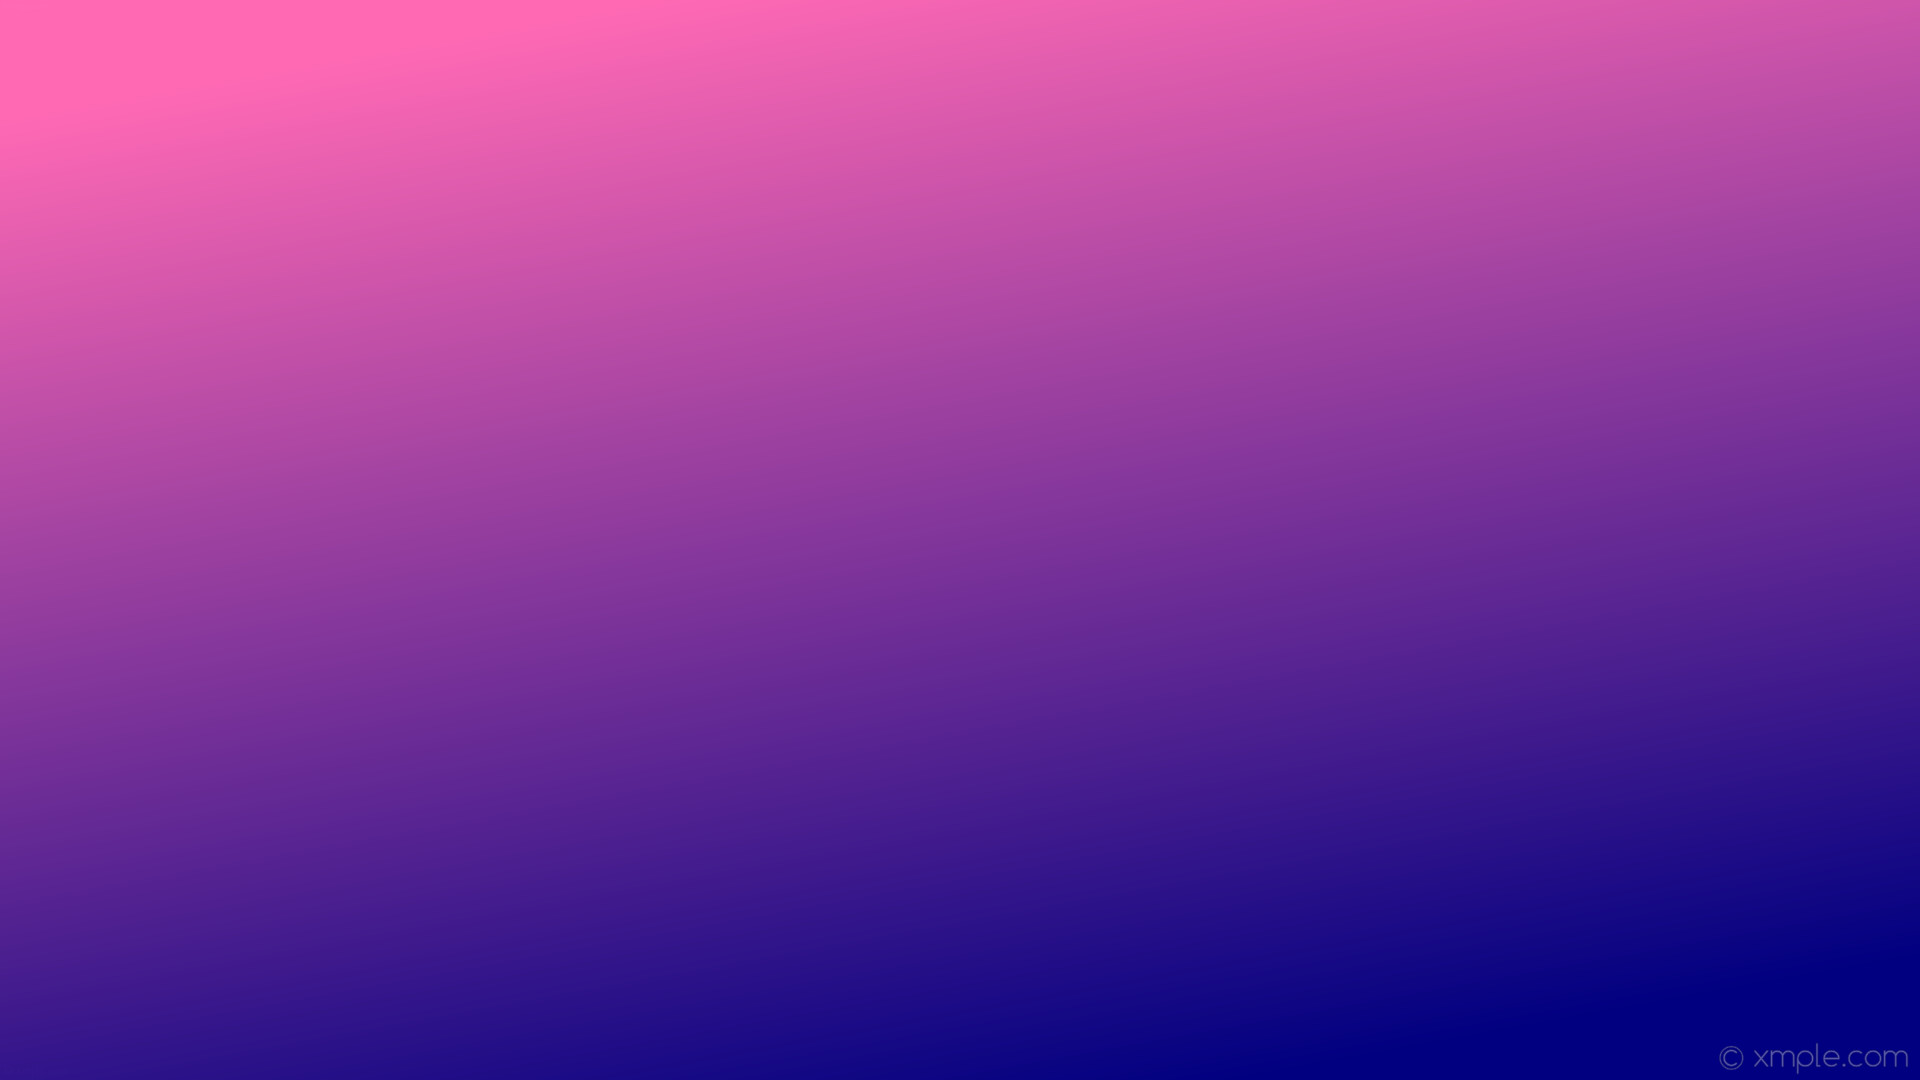 1920x1080 wallpaper gradient pink blue linear navy hot pink #000080 #ff69b4 300Â°